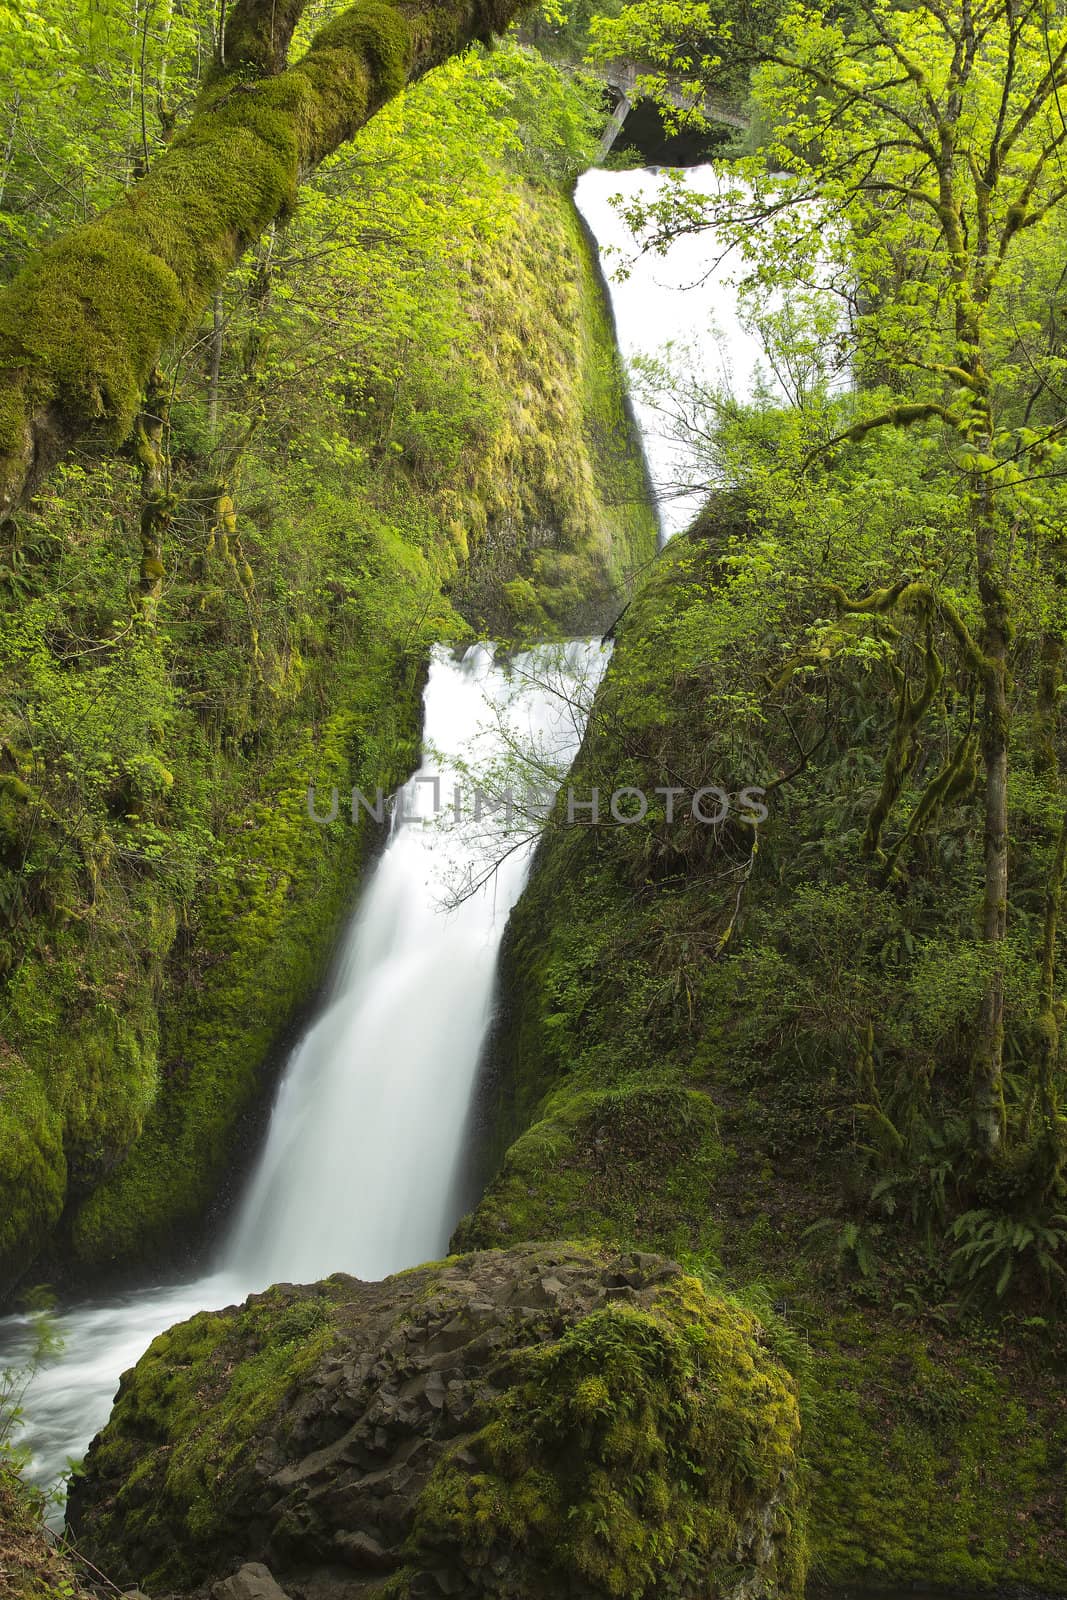 Bridal Veil falls water flow Columbia River Gorge Oregon.